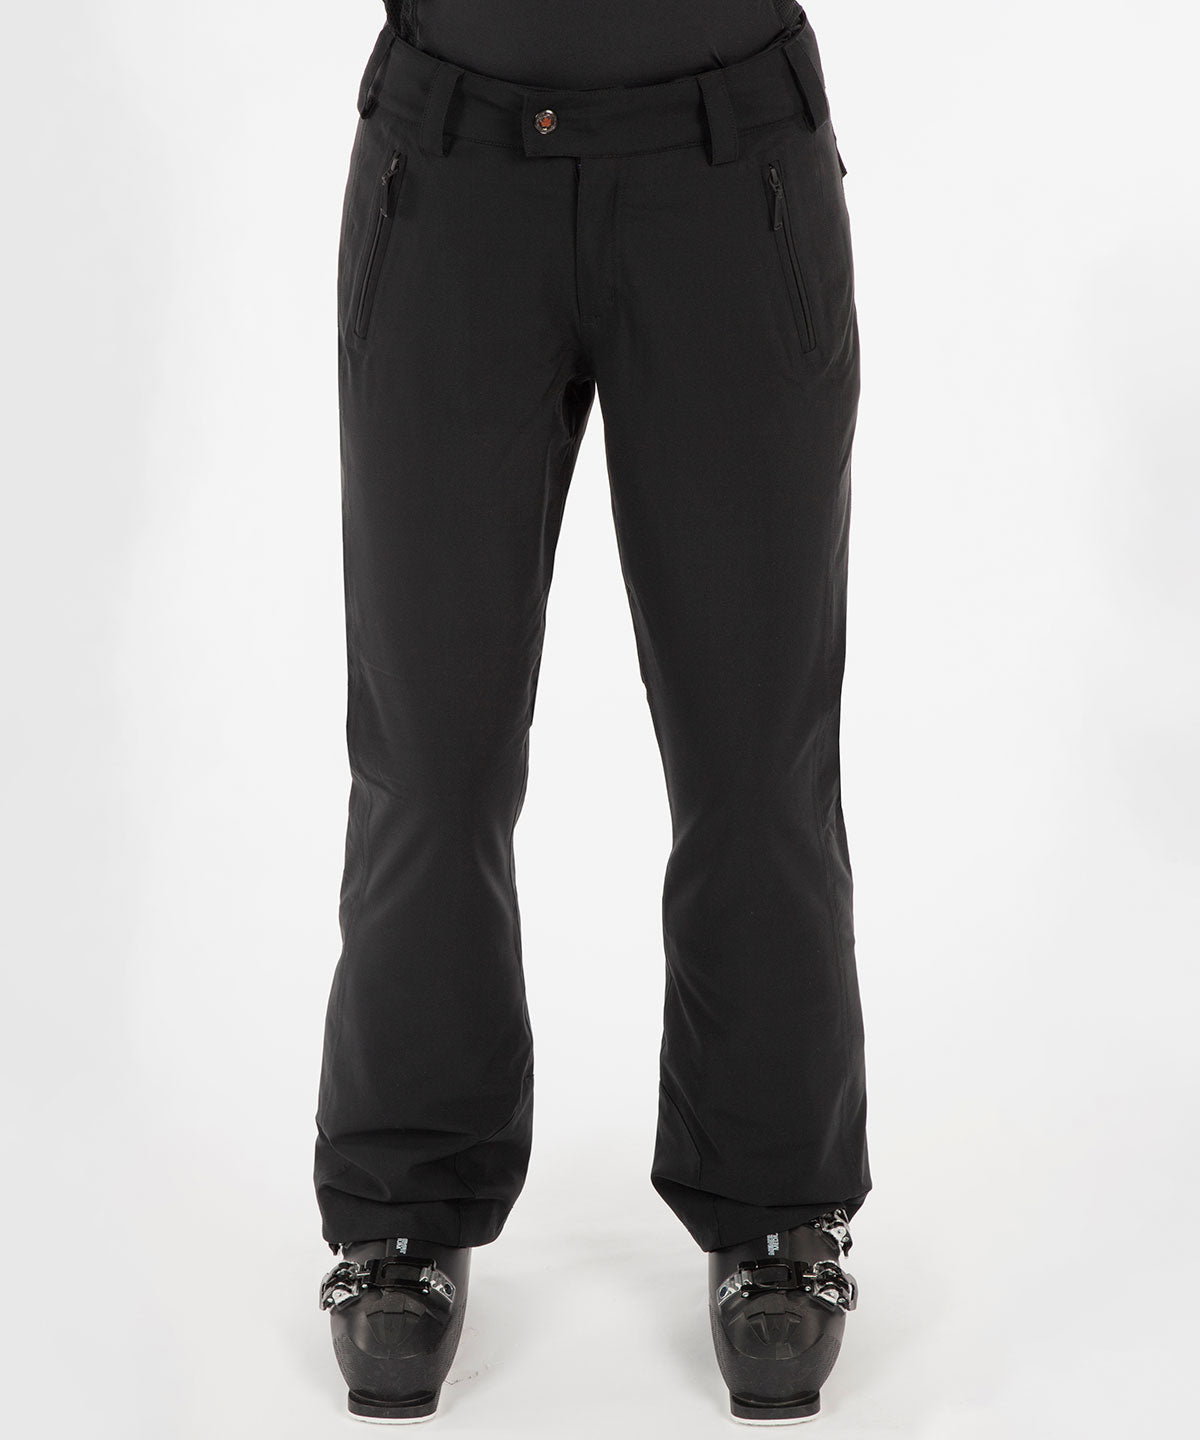 NWT Sunice Stormpack Womens Size Large x 32 Black Snow Ski Pants w Boot  Gaiters